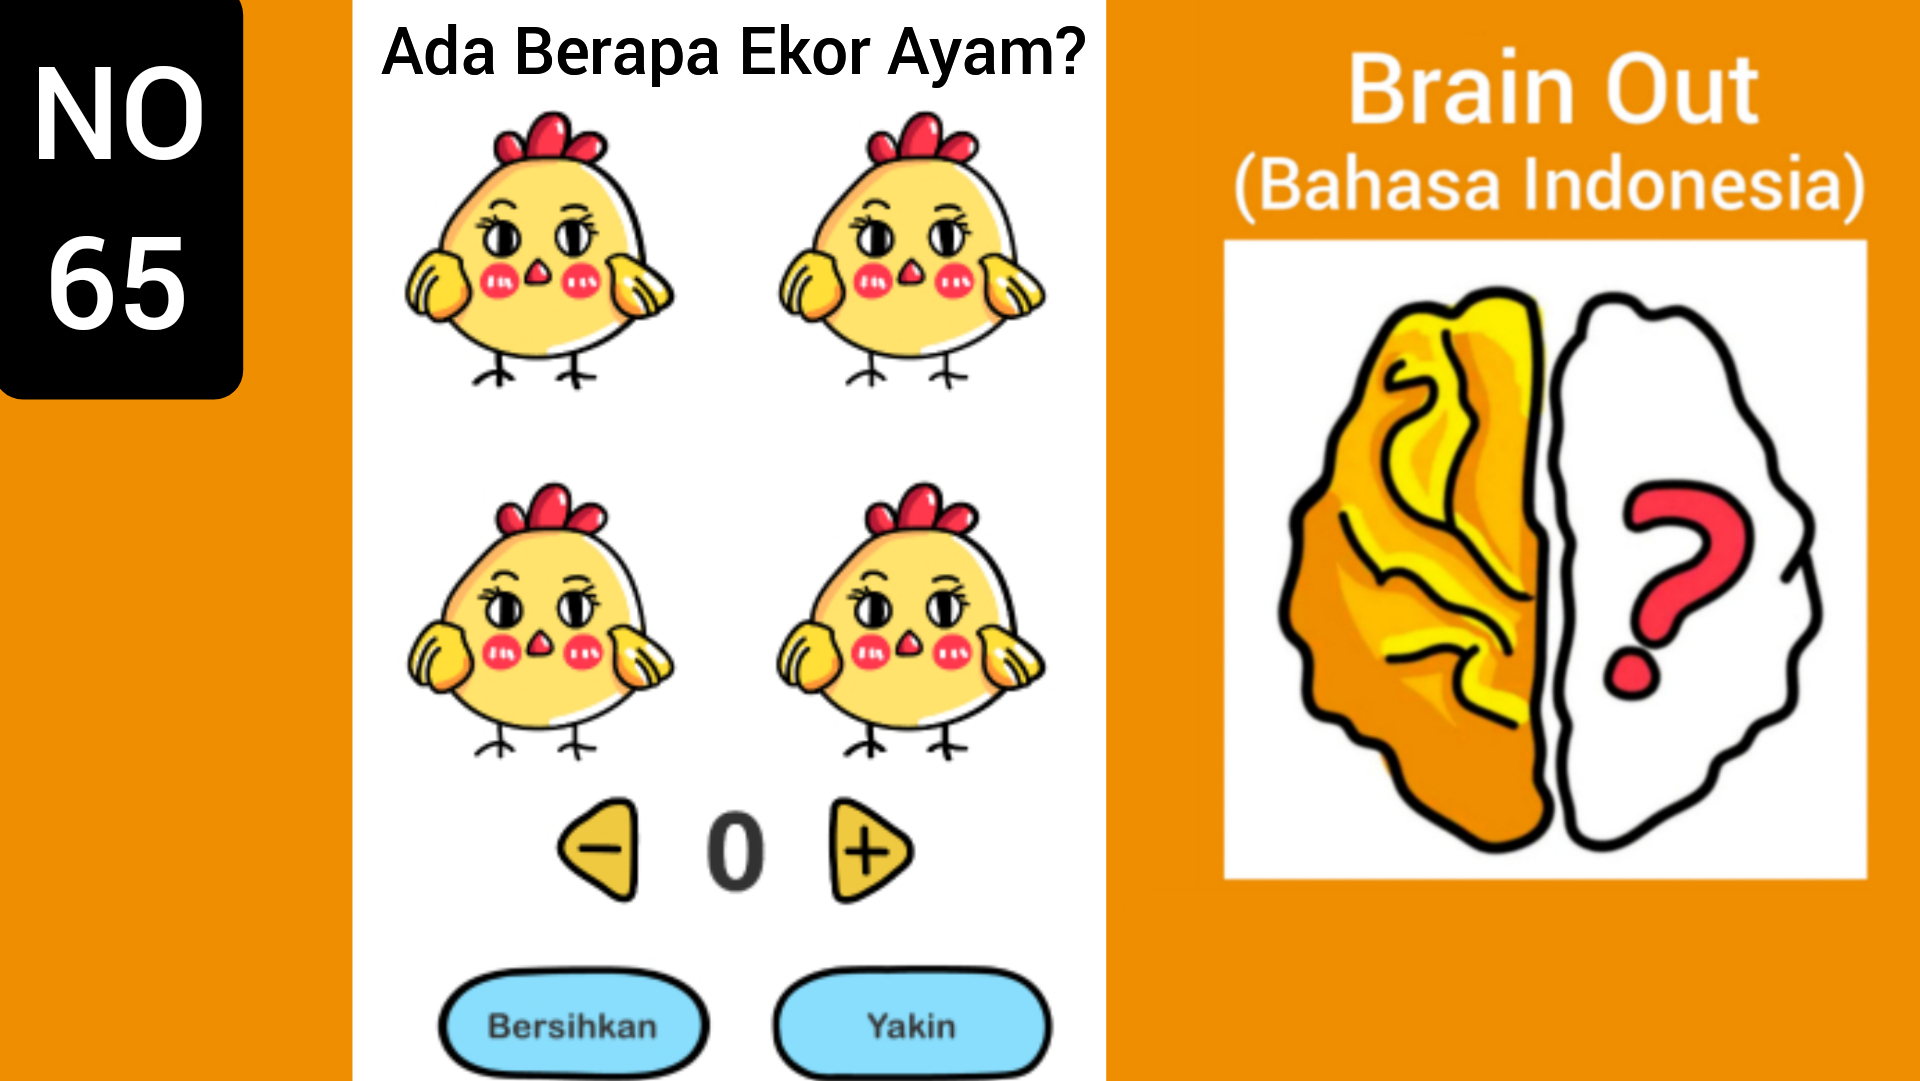 Brain 178